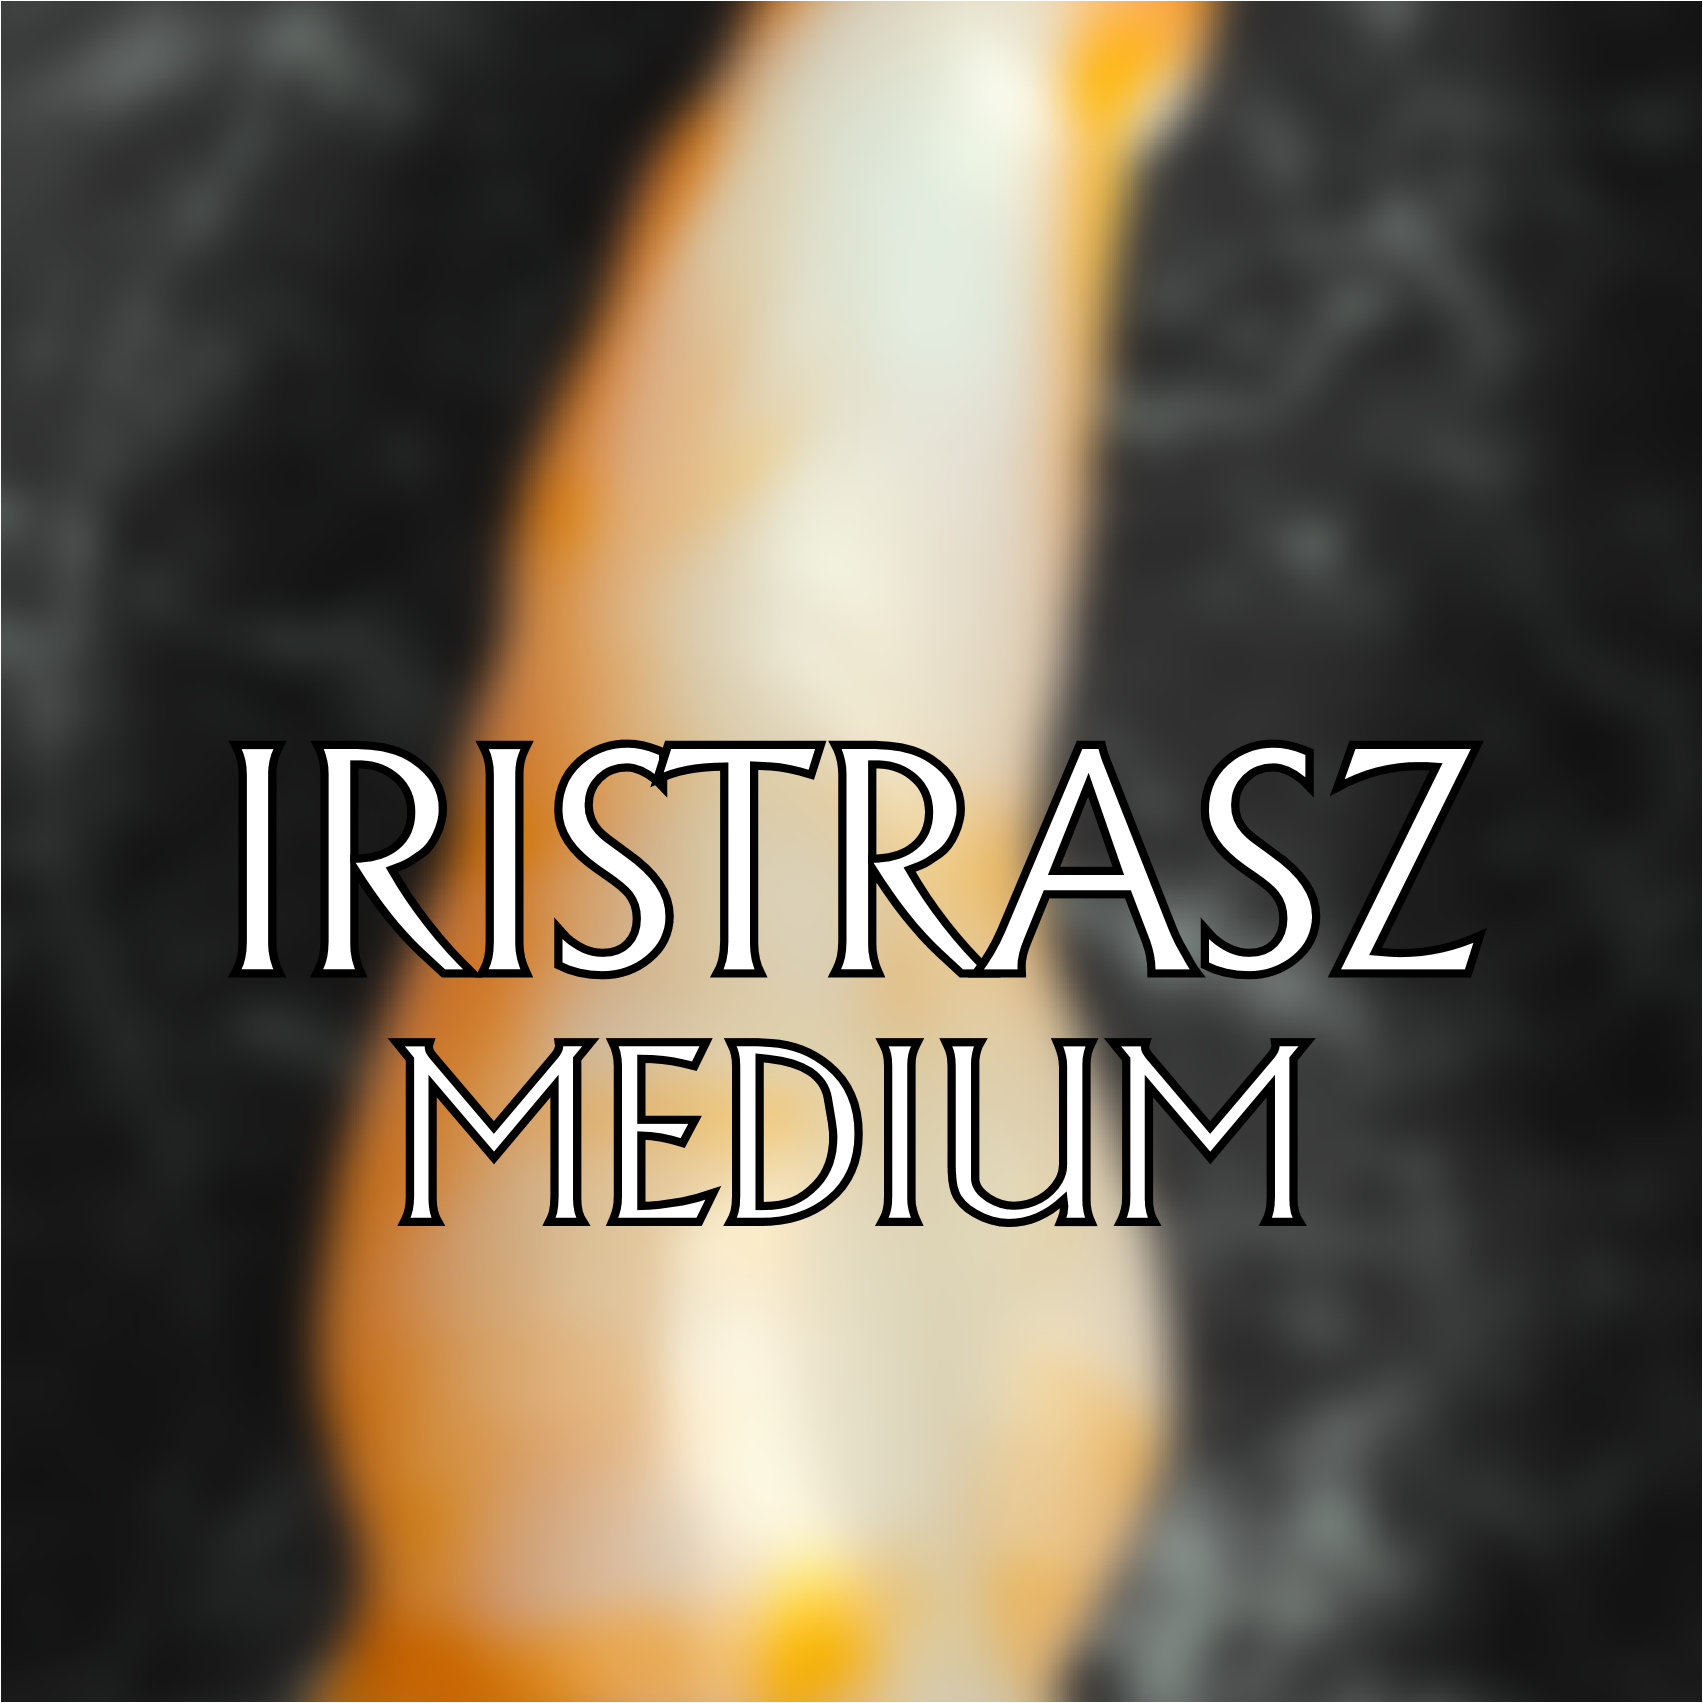 Iristrasz (Medium) photo